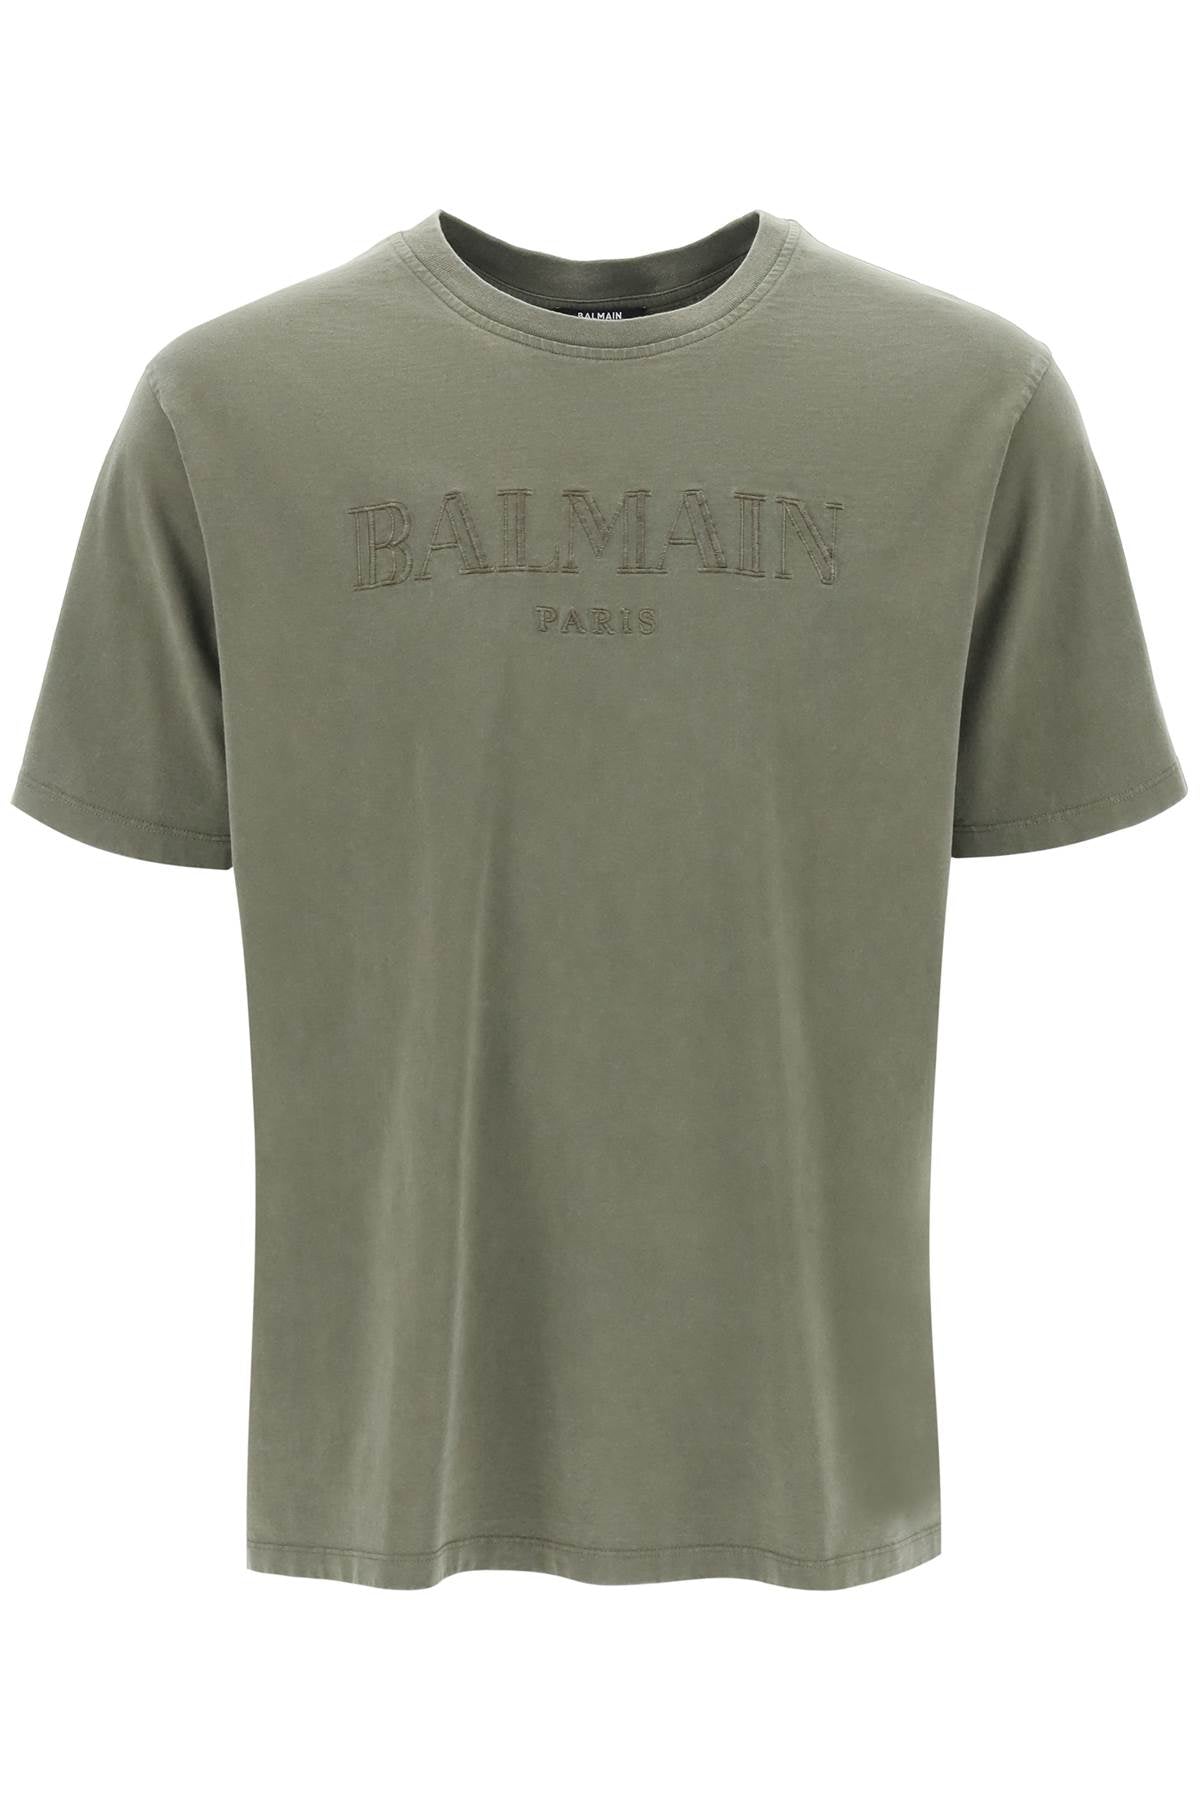 Balmain vintage balmain t-shirt